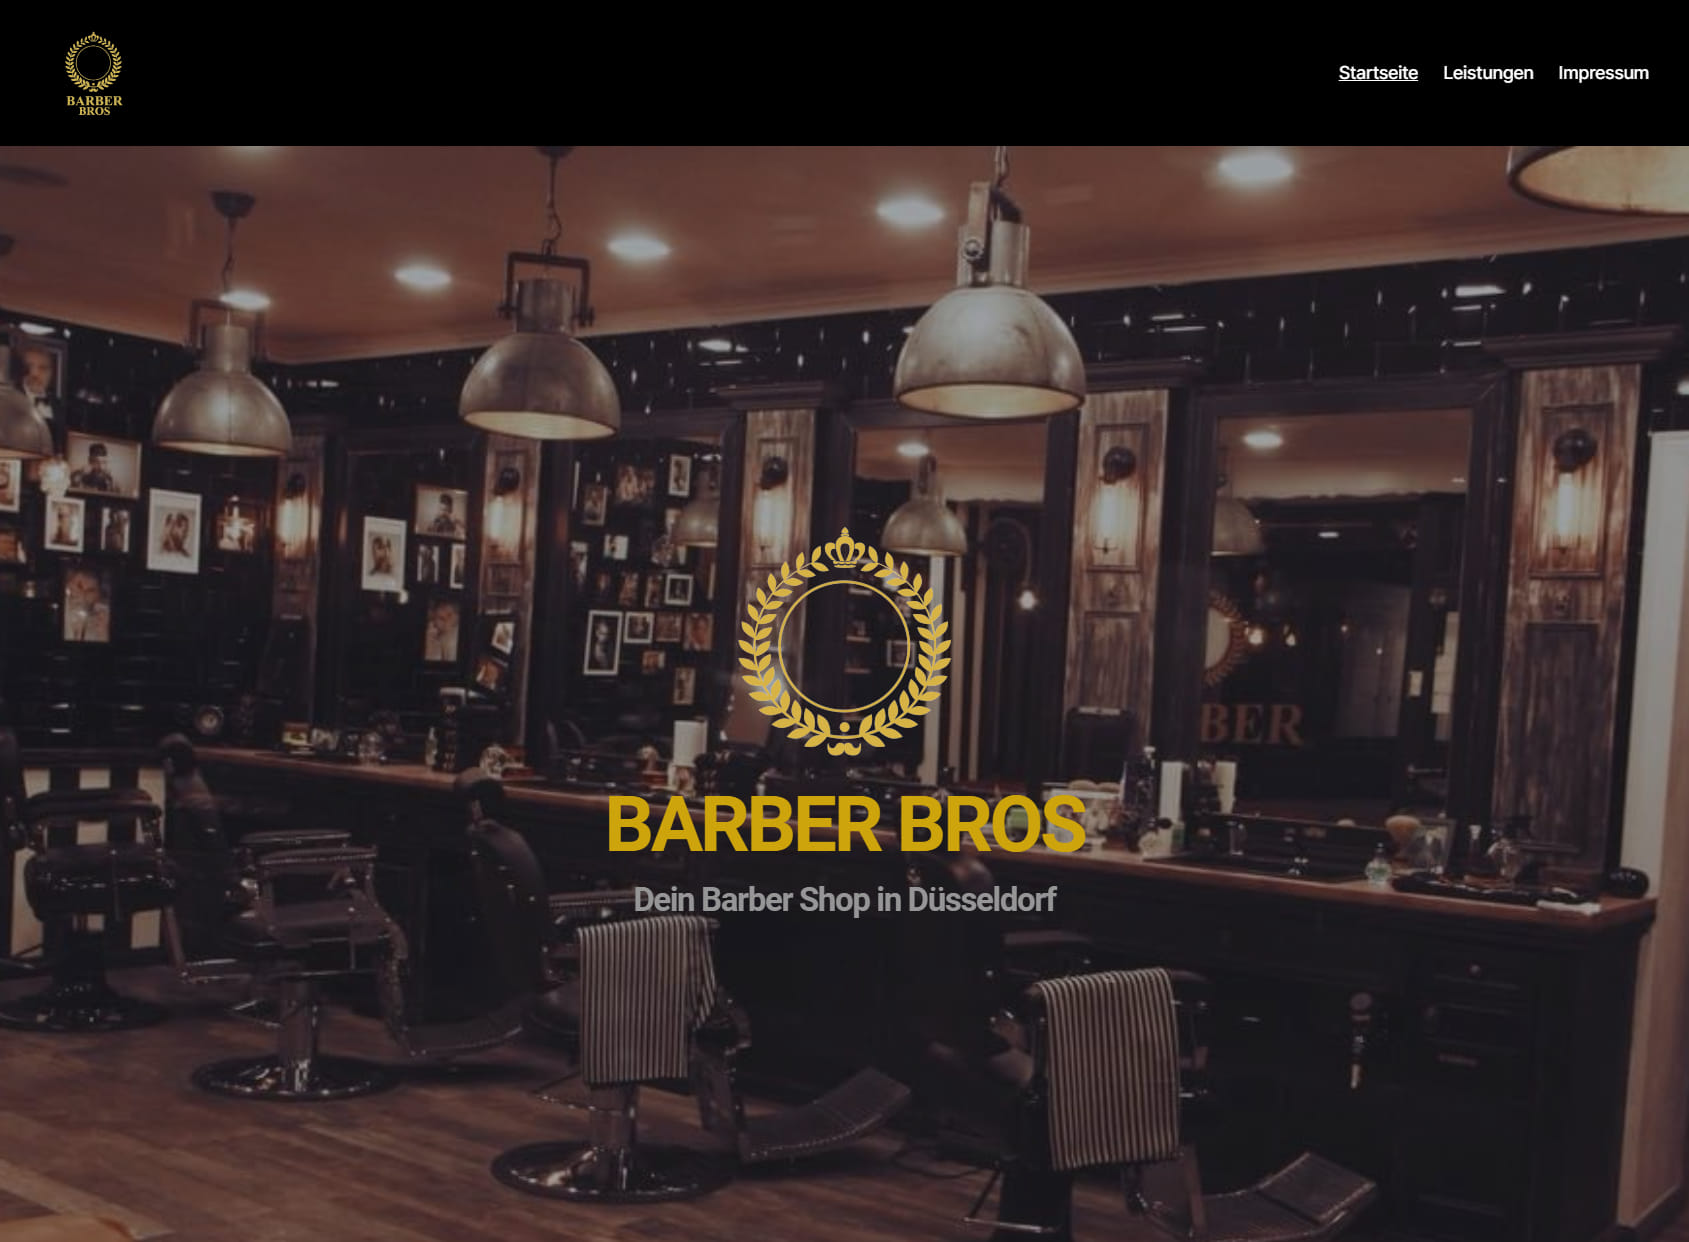 Barber Bros